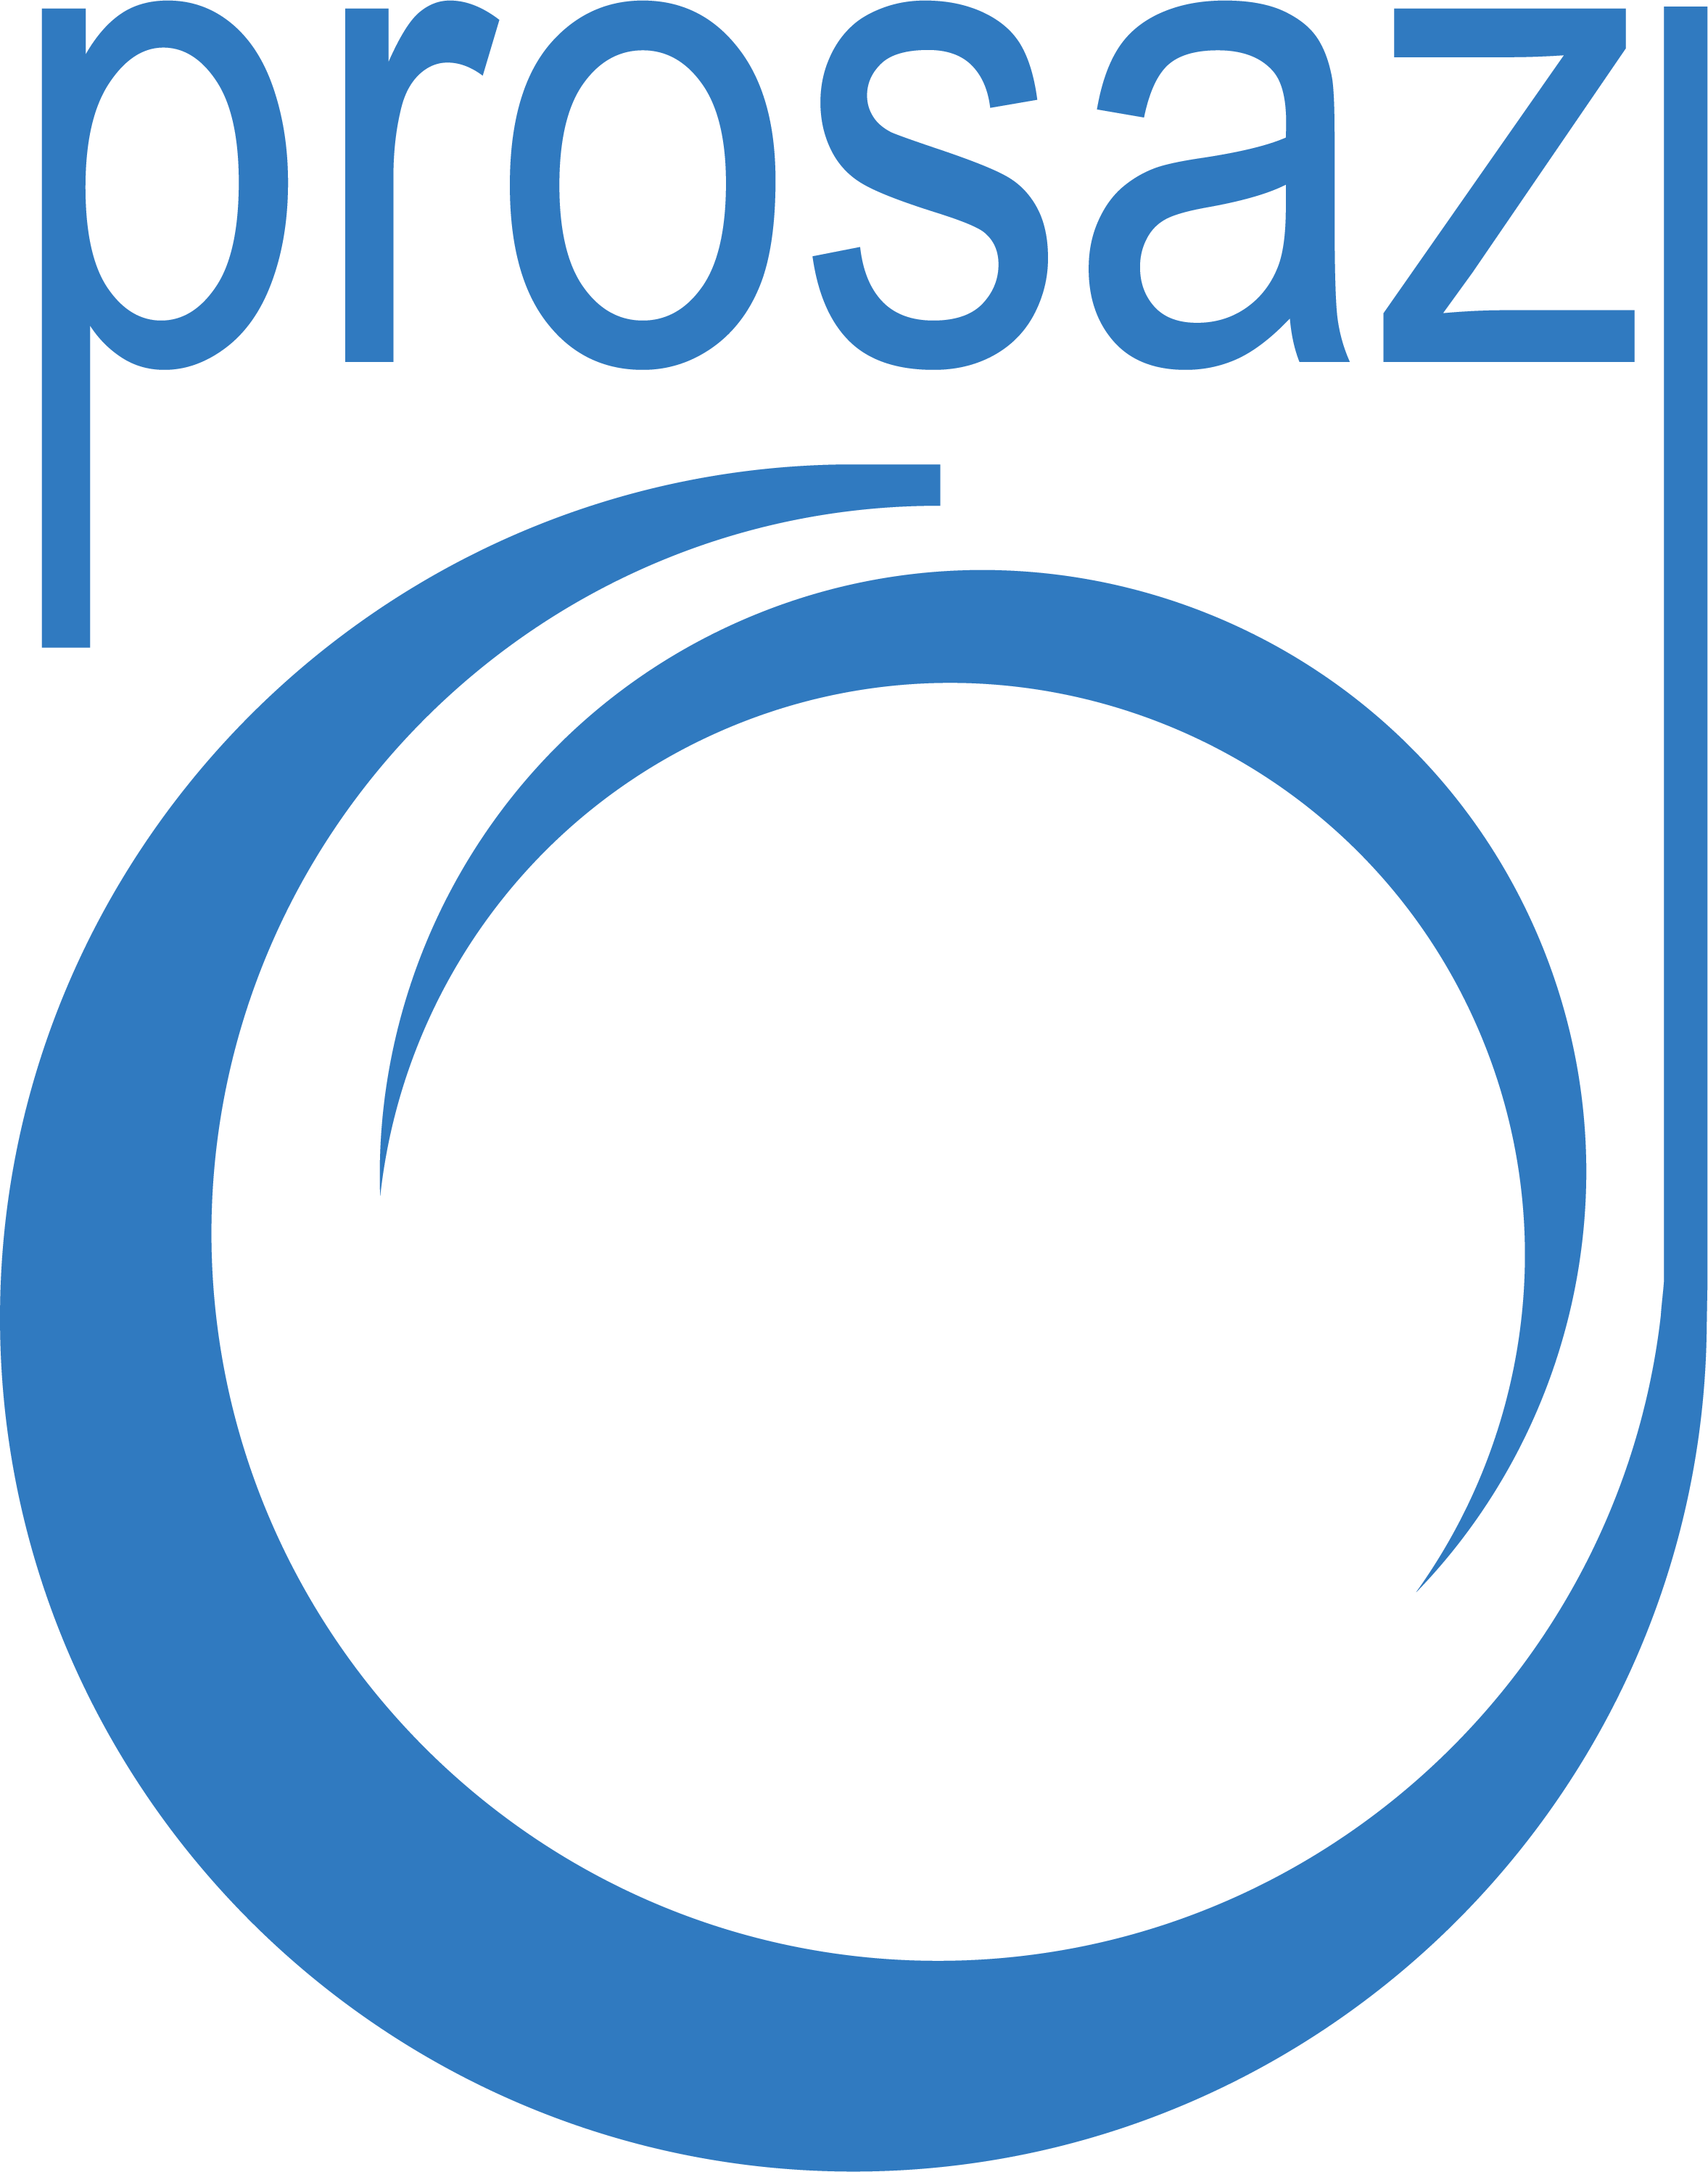 PROSAZ - logo